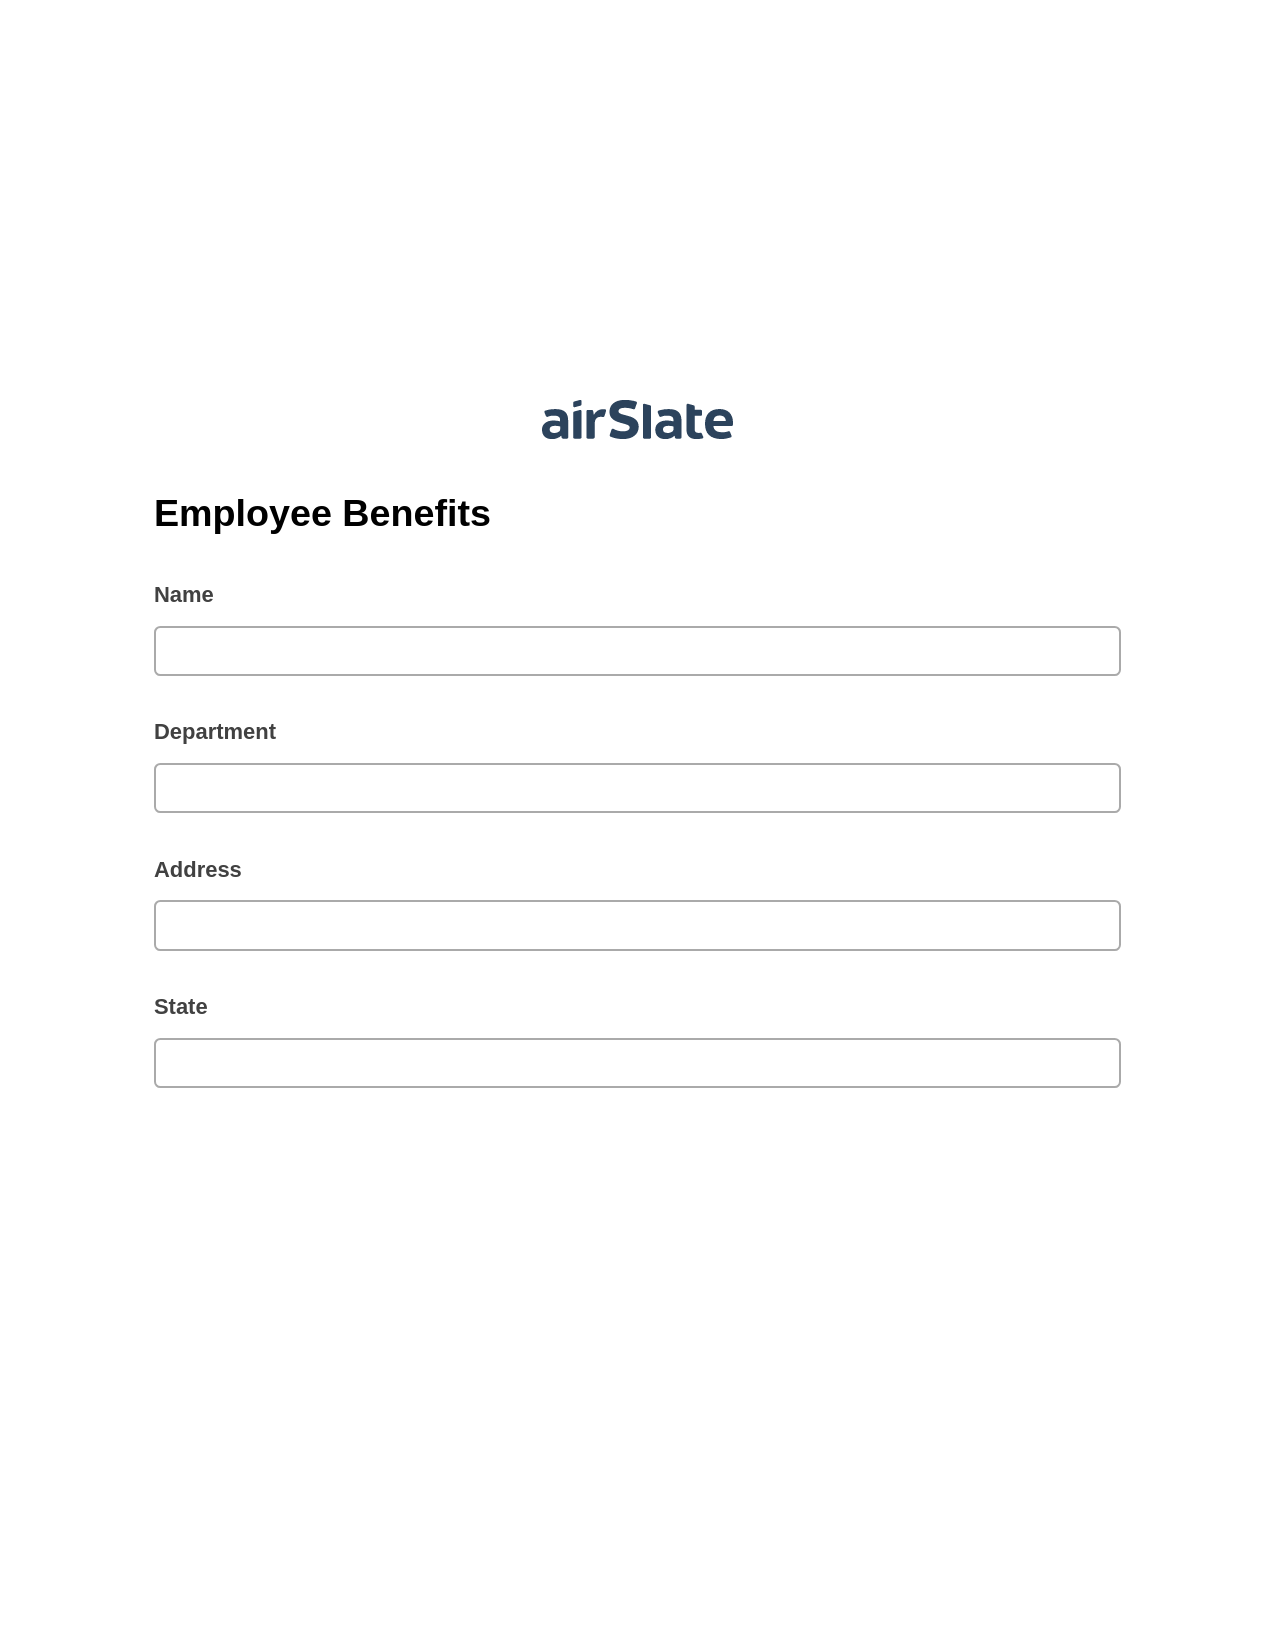 Employee Benefits Pre-fill from CSV File Bot, Slack Notification Bot, OneDrive Bot